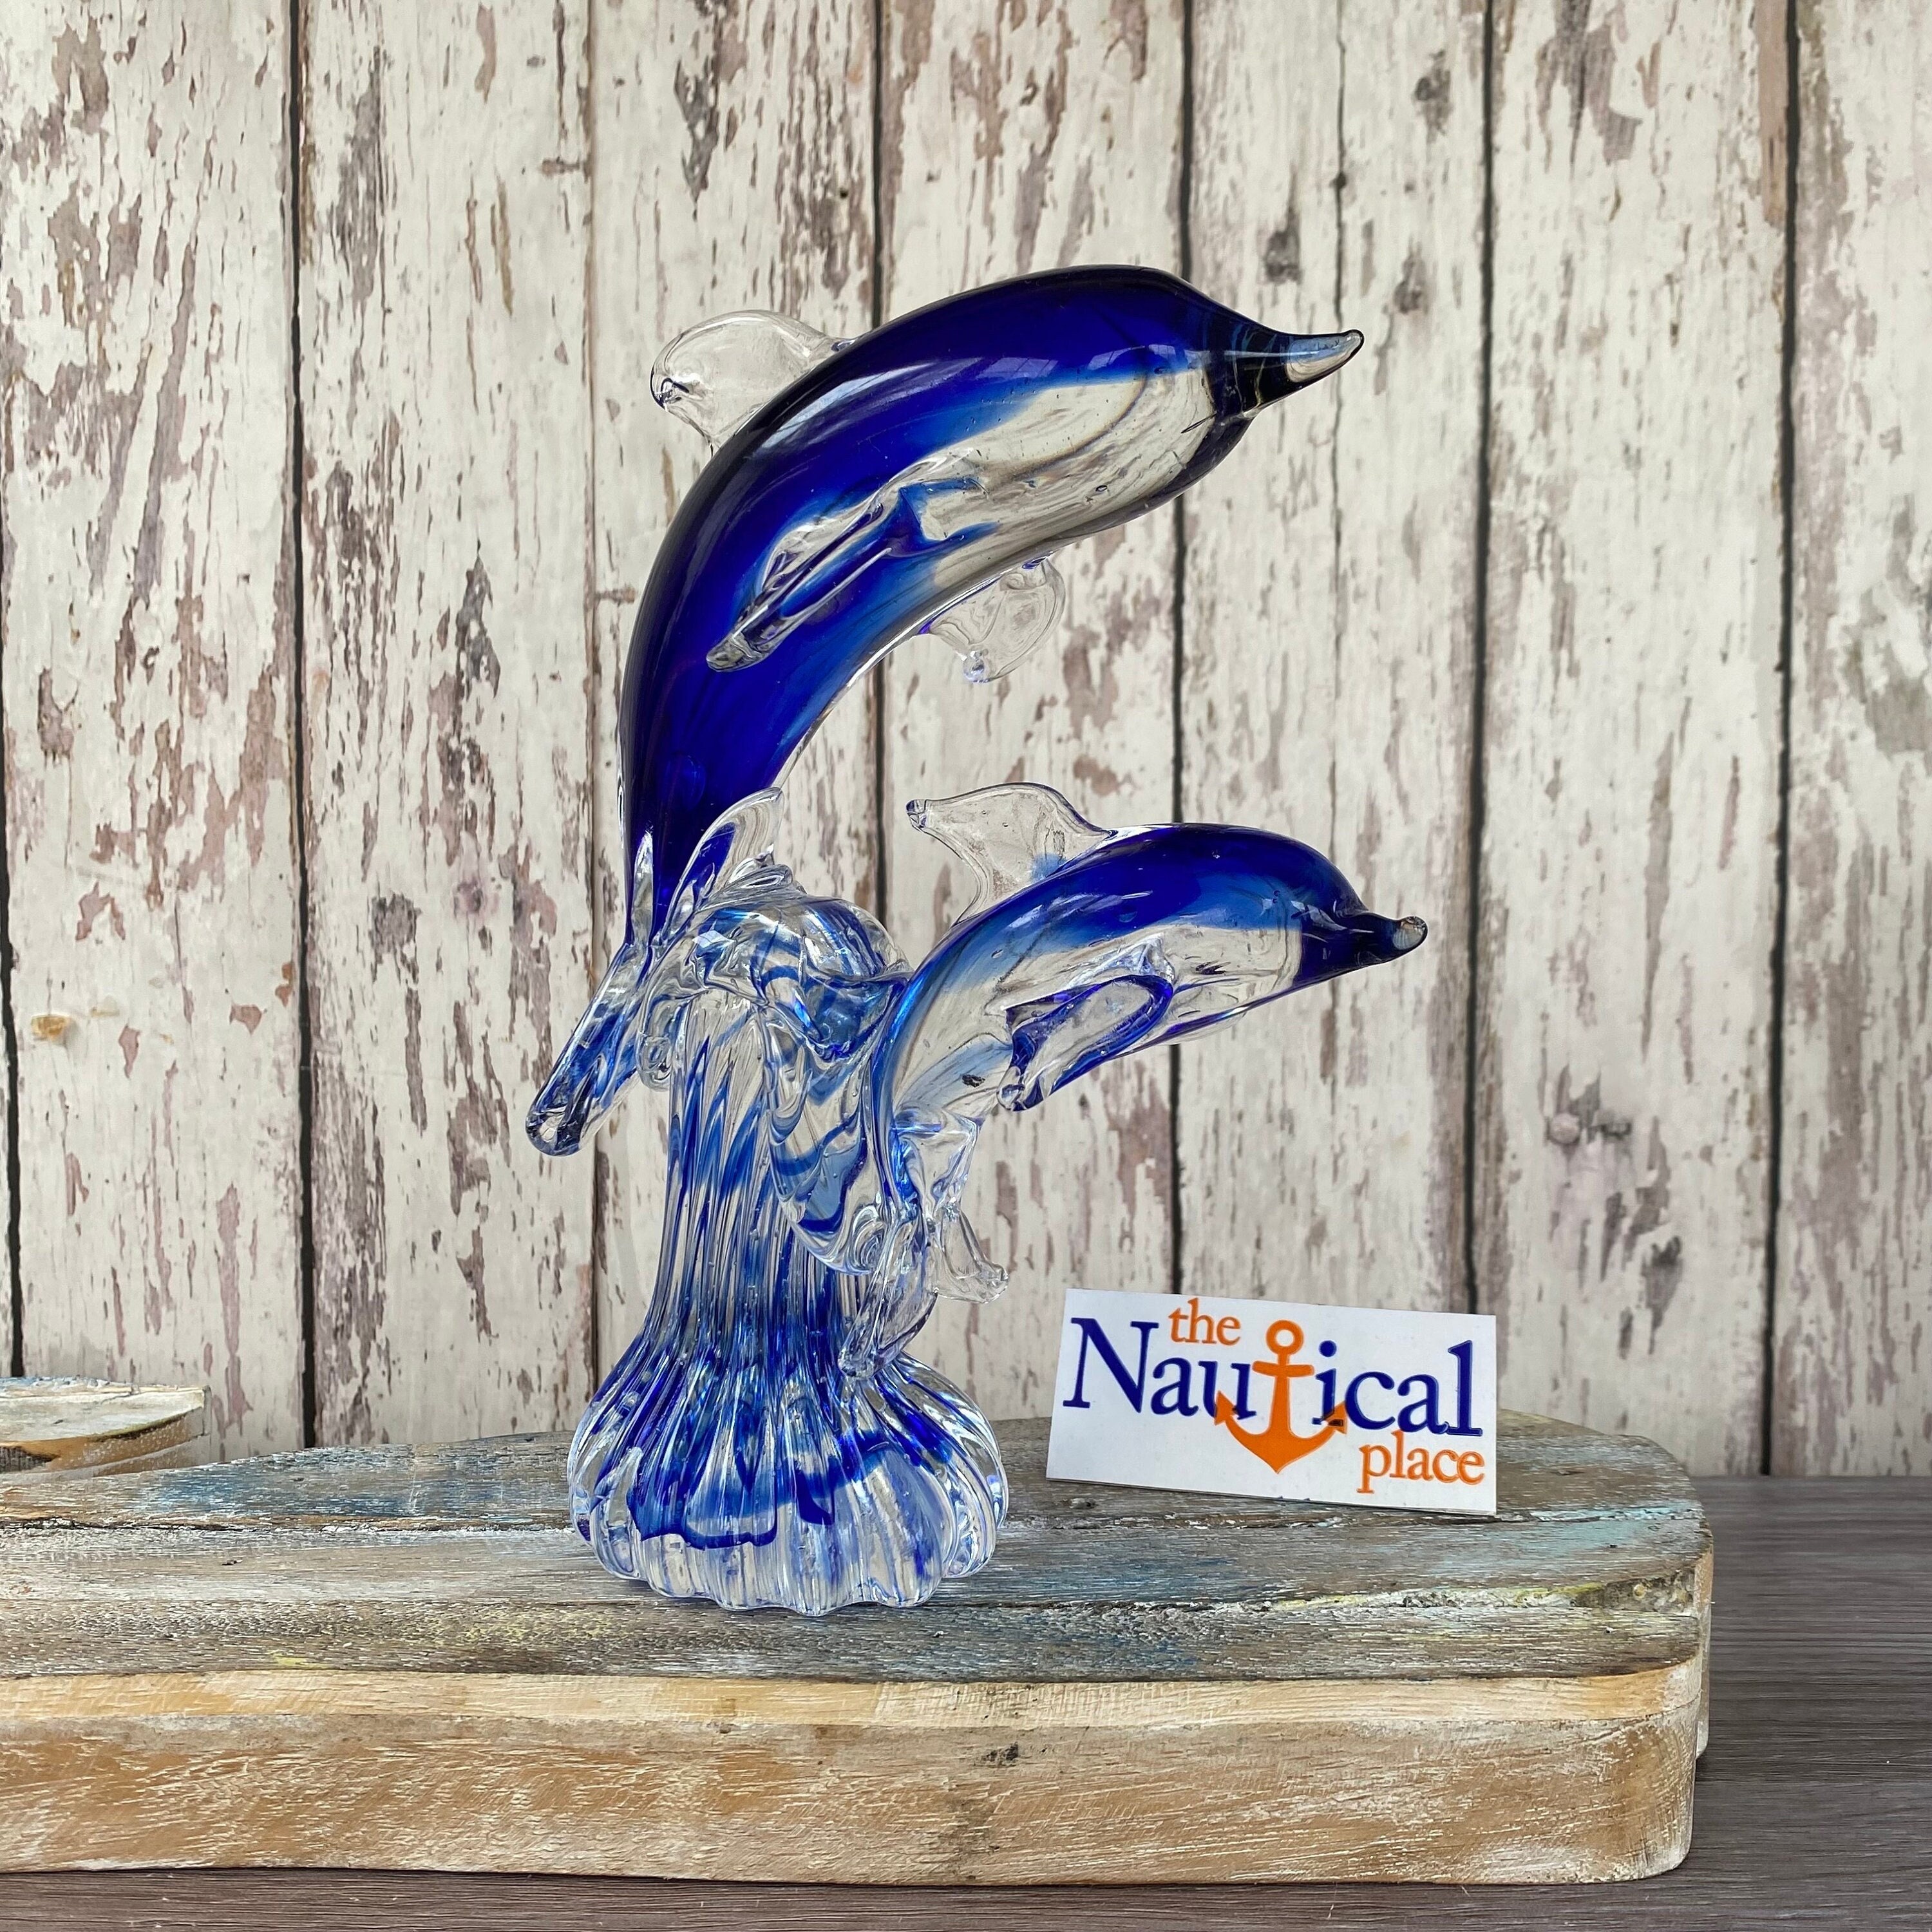 Glass Straw With Handmade Dolphin Figurine / Reusable Straw Cute